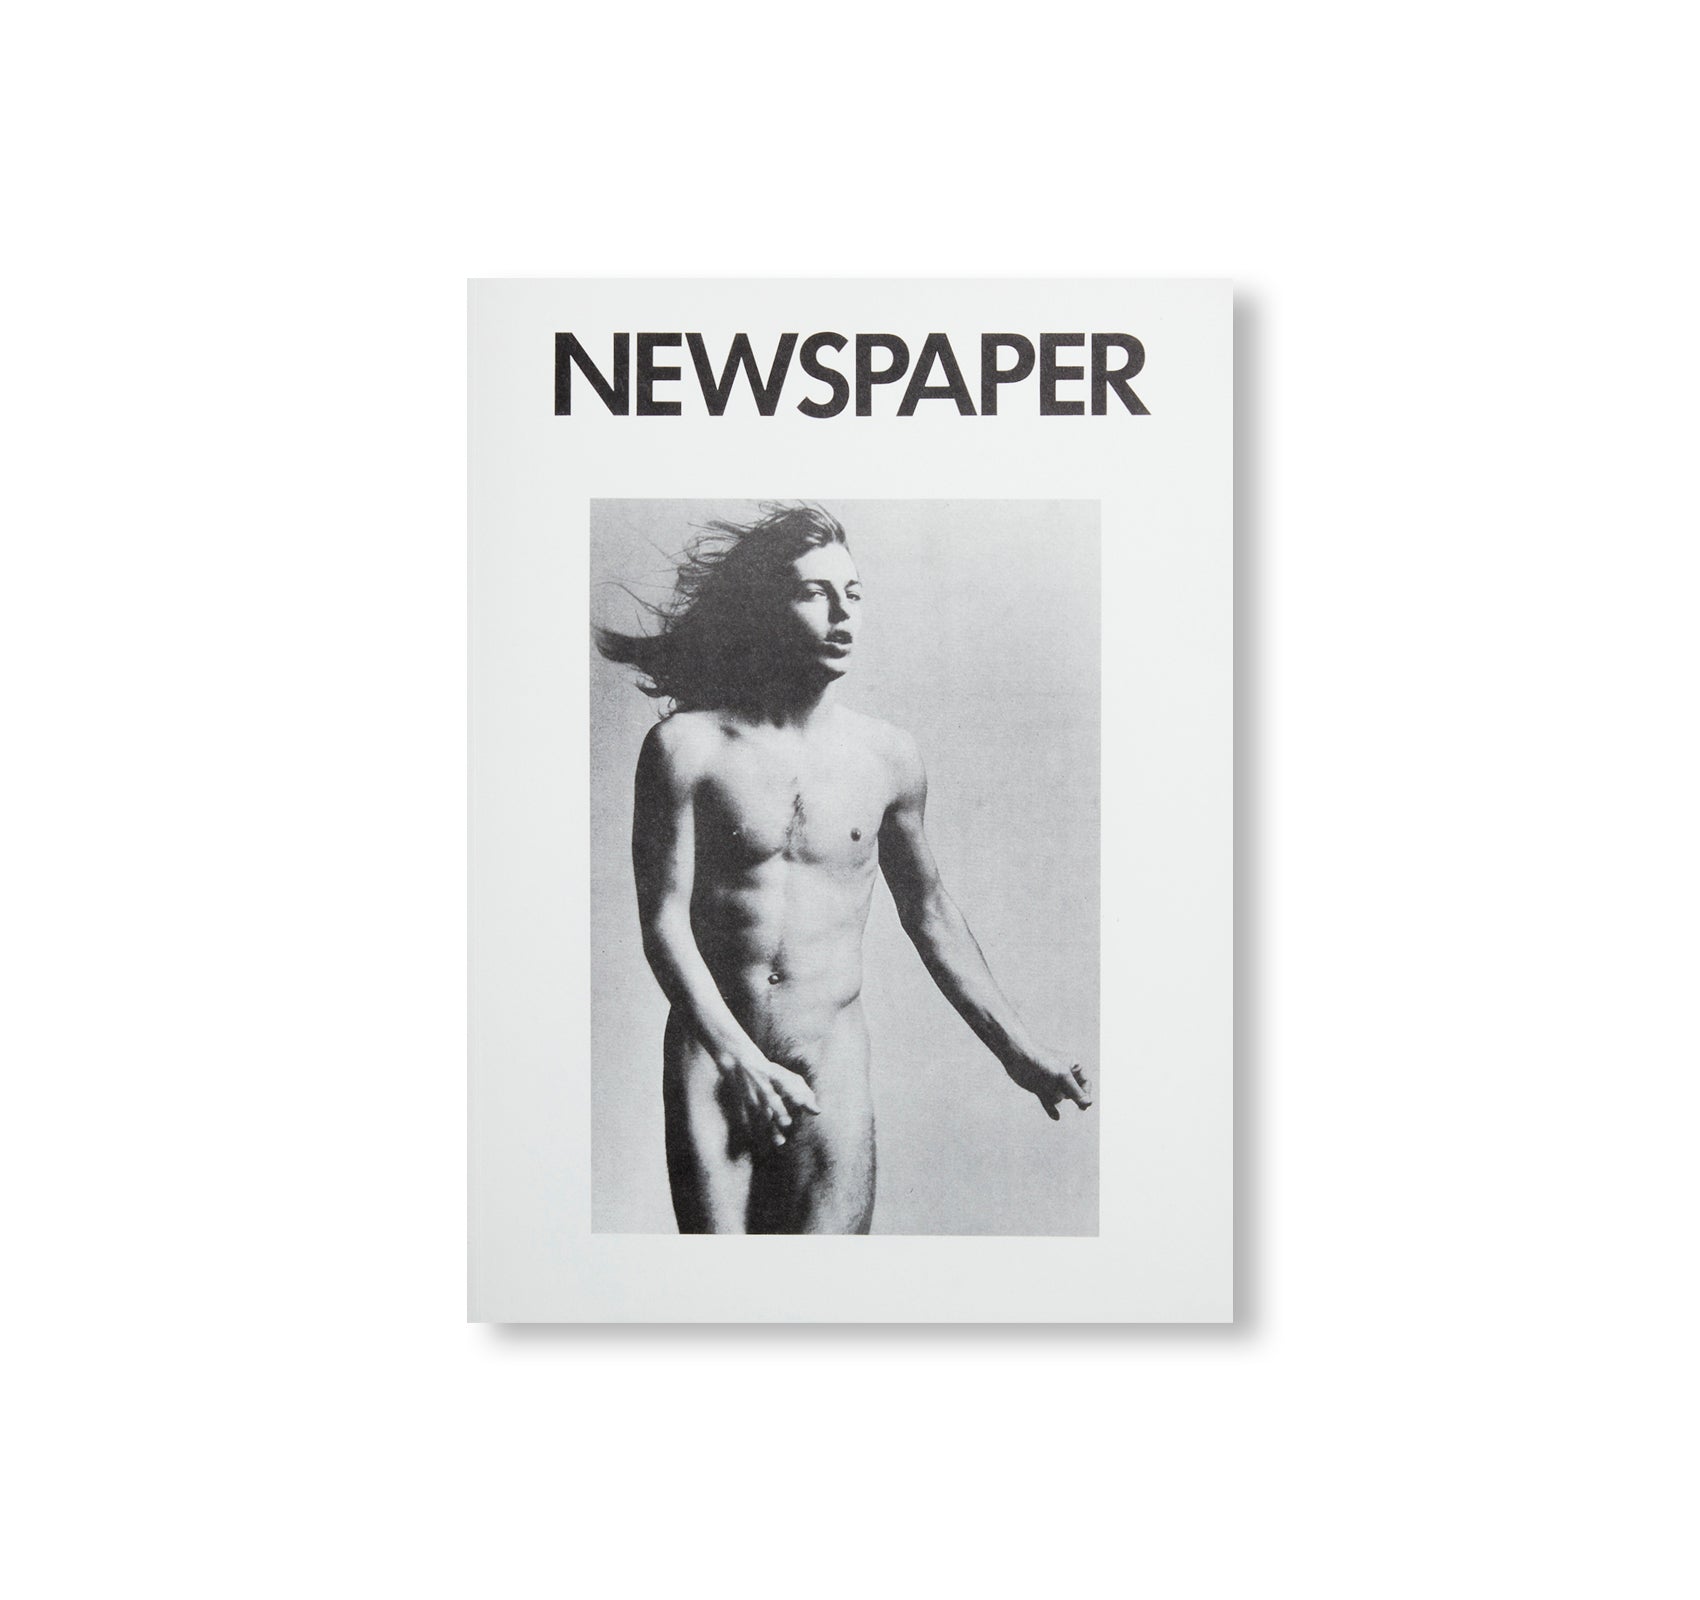 NEWSPAPER by Steve Lawrence, Peter Hujar, Andrew Ullrick